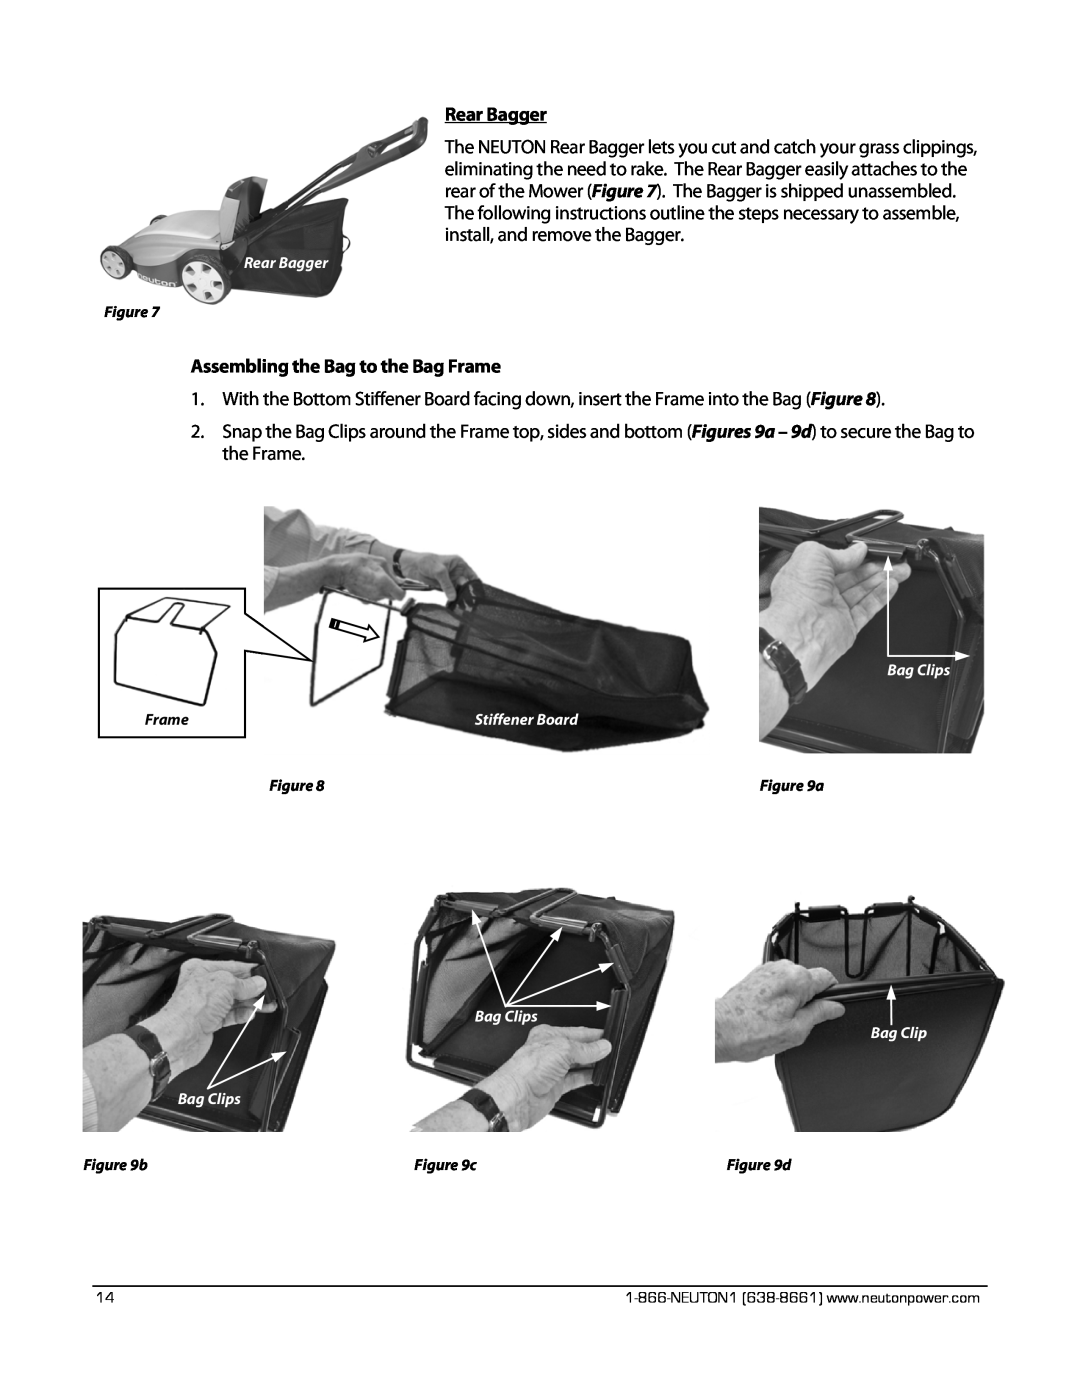 Neuton CE 6.2 manual Rear Bagger, Assembling the Bag to the Bag Frame, c 